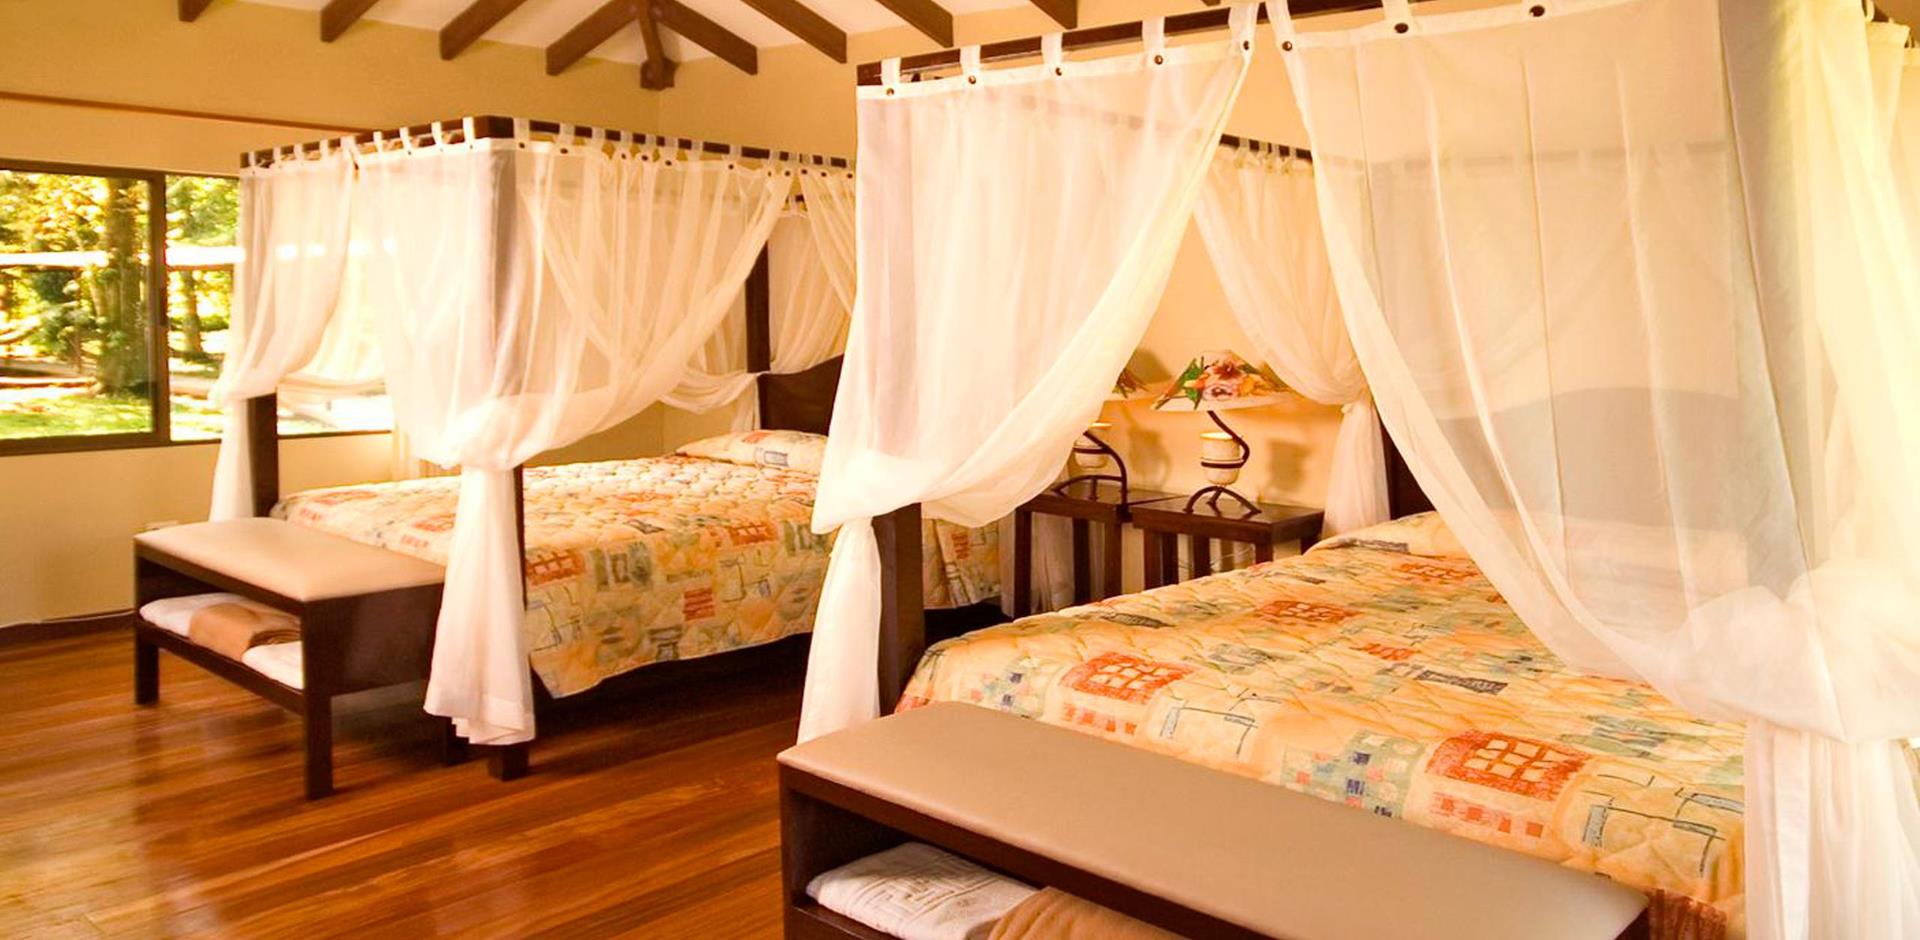 Bedroom, Manatus, Costa Rica